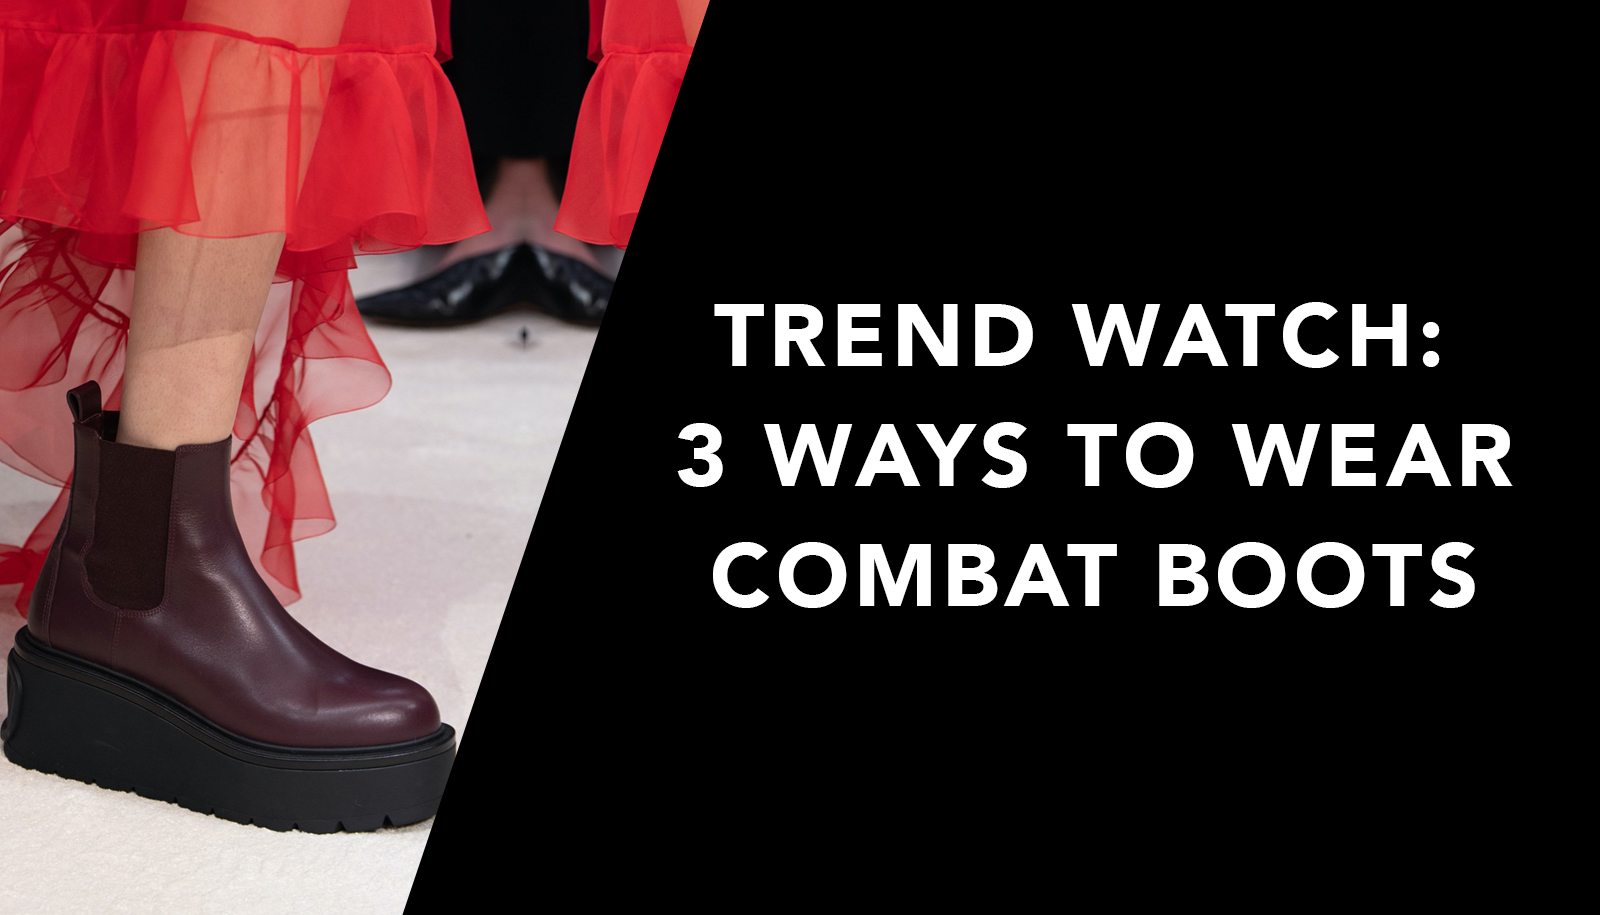 Trend Watch: 3 ways to wear combat boots